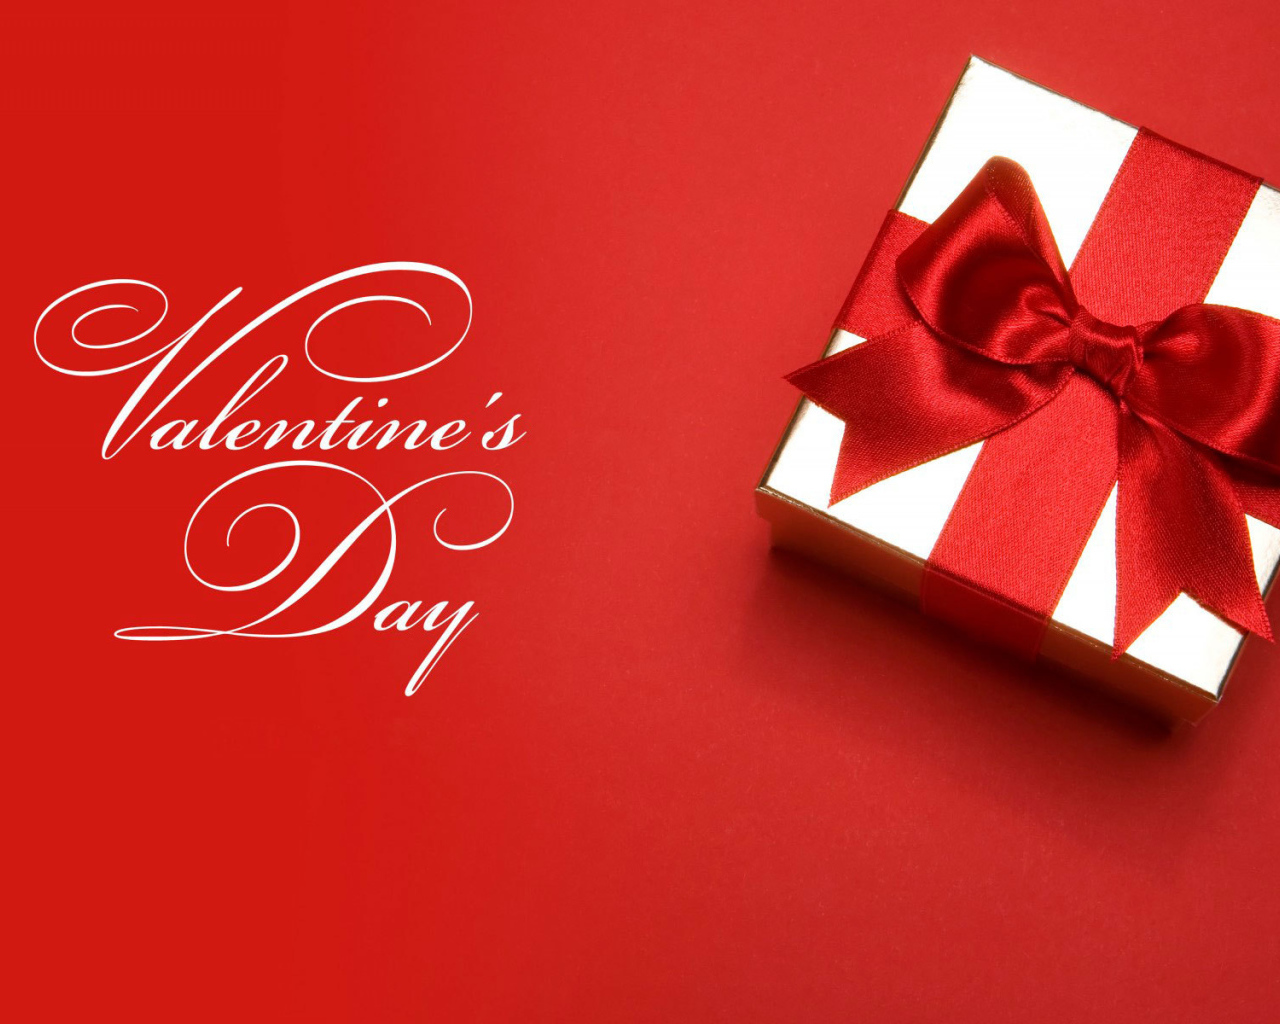 Подарок на День Святого Валентина 14 февраля